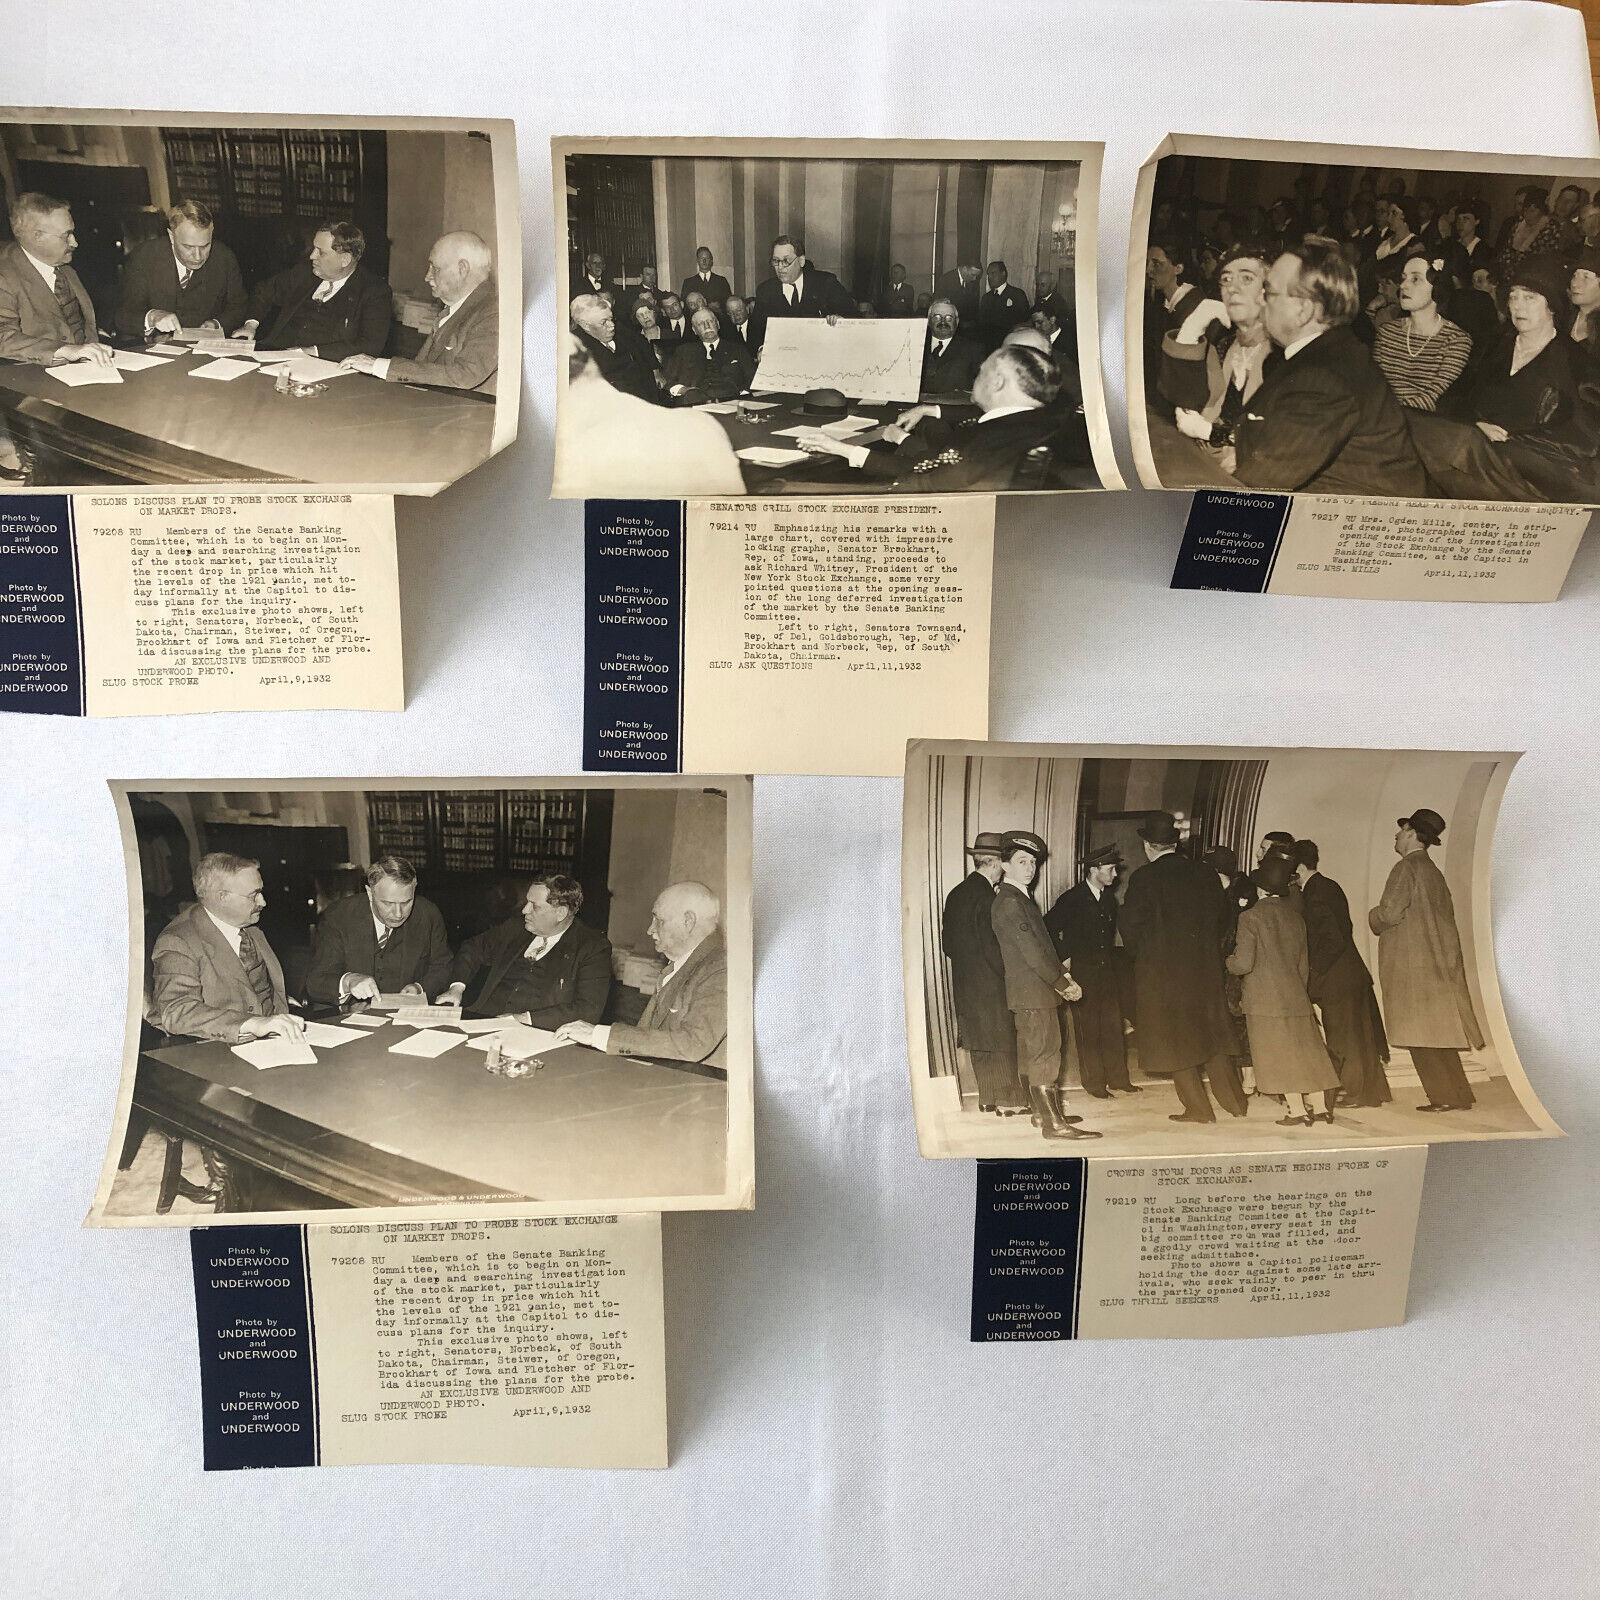 Press Photo Photograph Lot Stock Market Crash Senate Investigation 1932 Archive